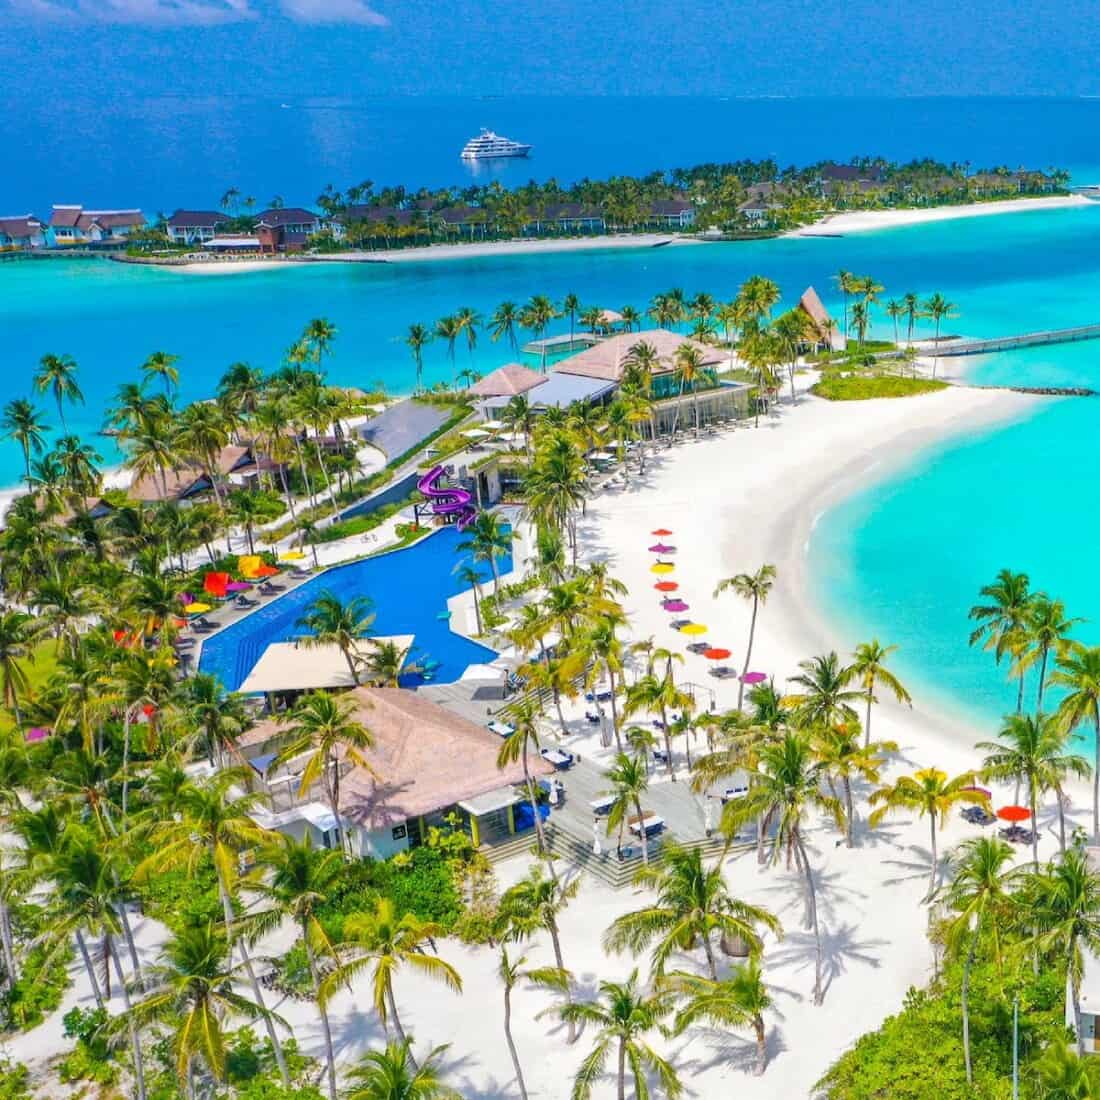 Hard Rock Malediven luftbild Pool mit Rutsche